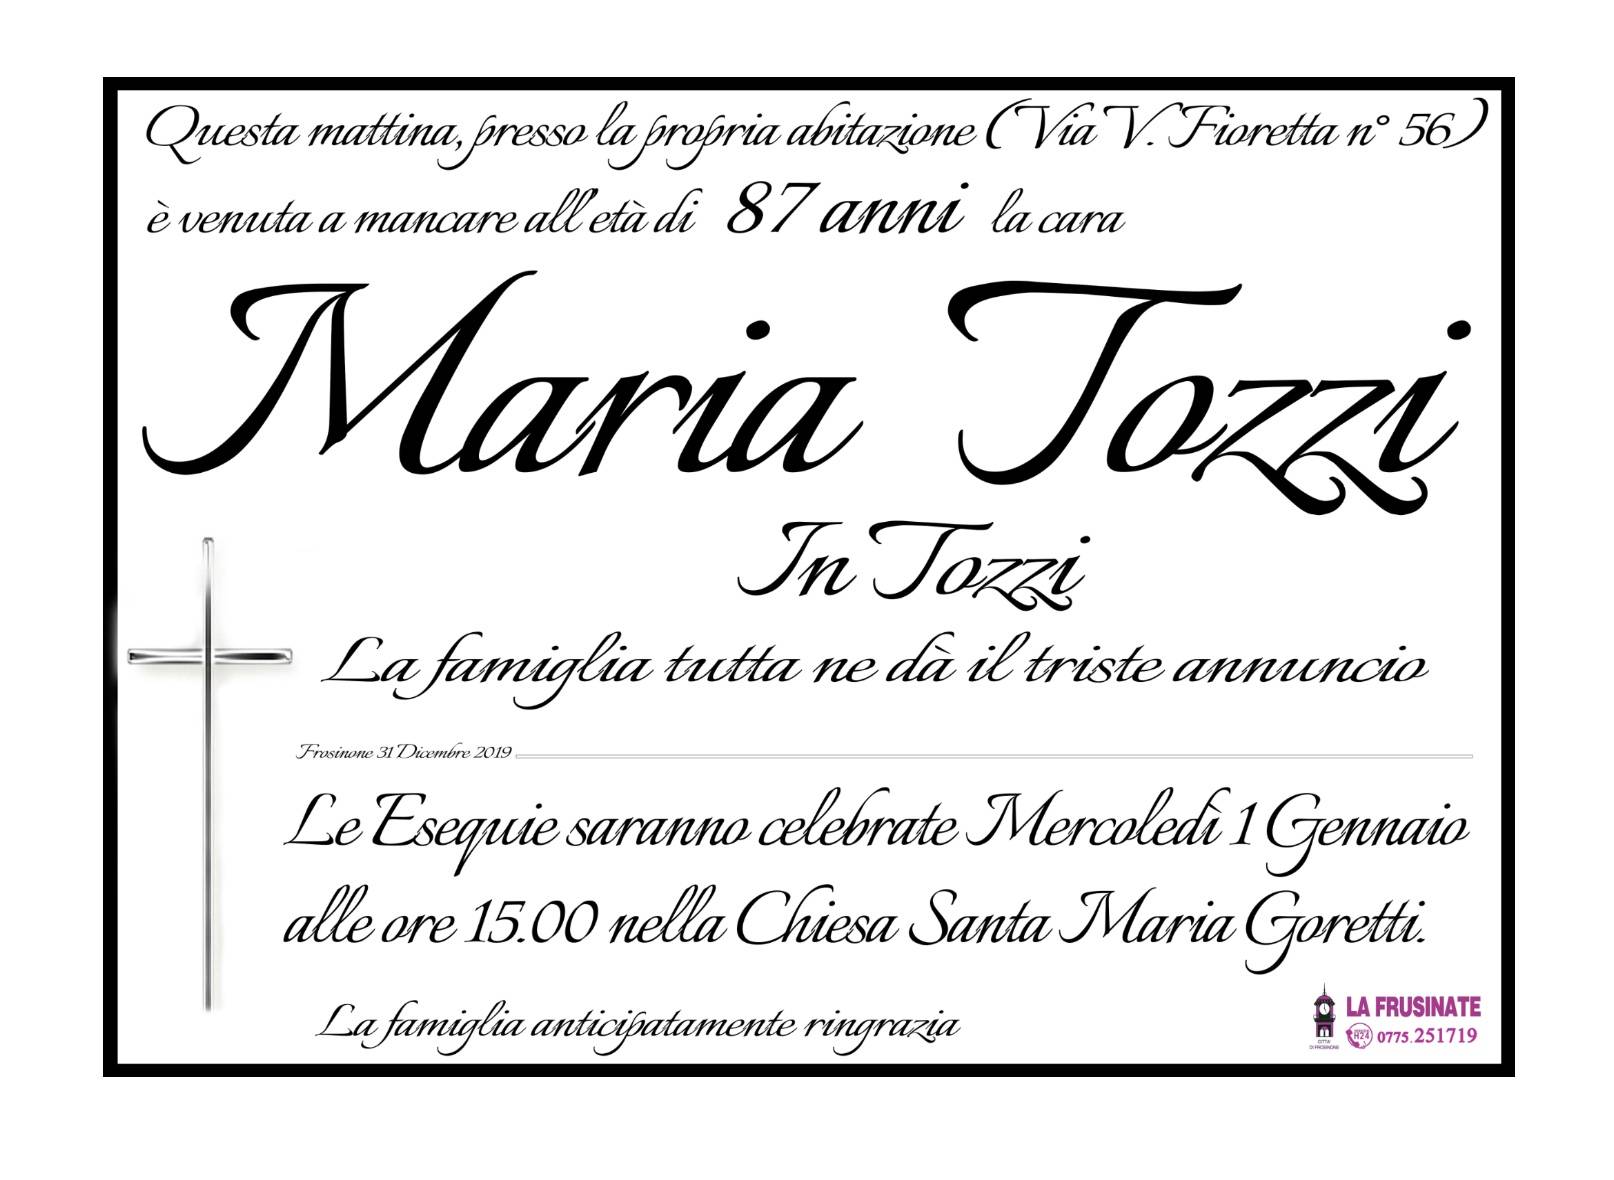 Maria Tozzi